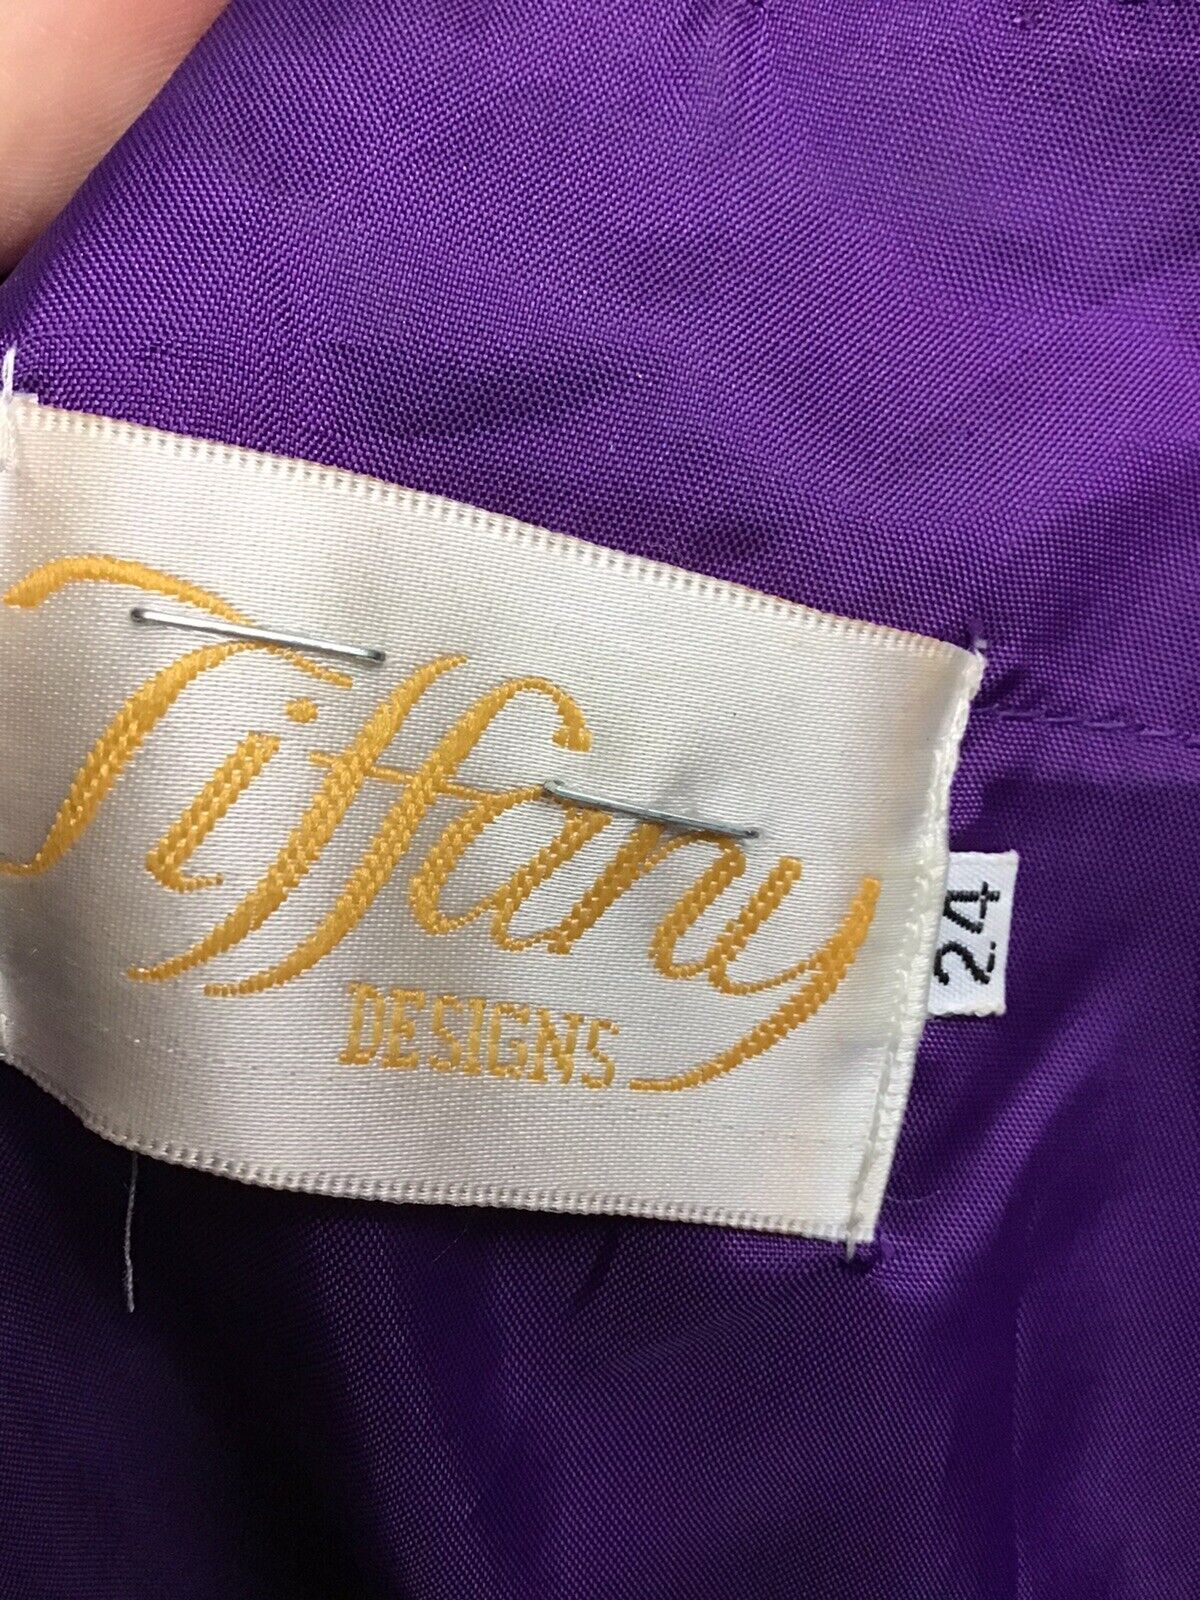 Tiffany Designs Dress Size 24. 1t1351 - image 4